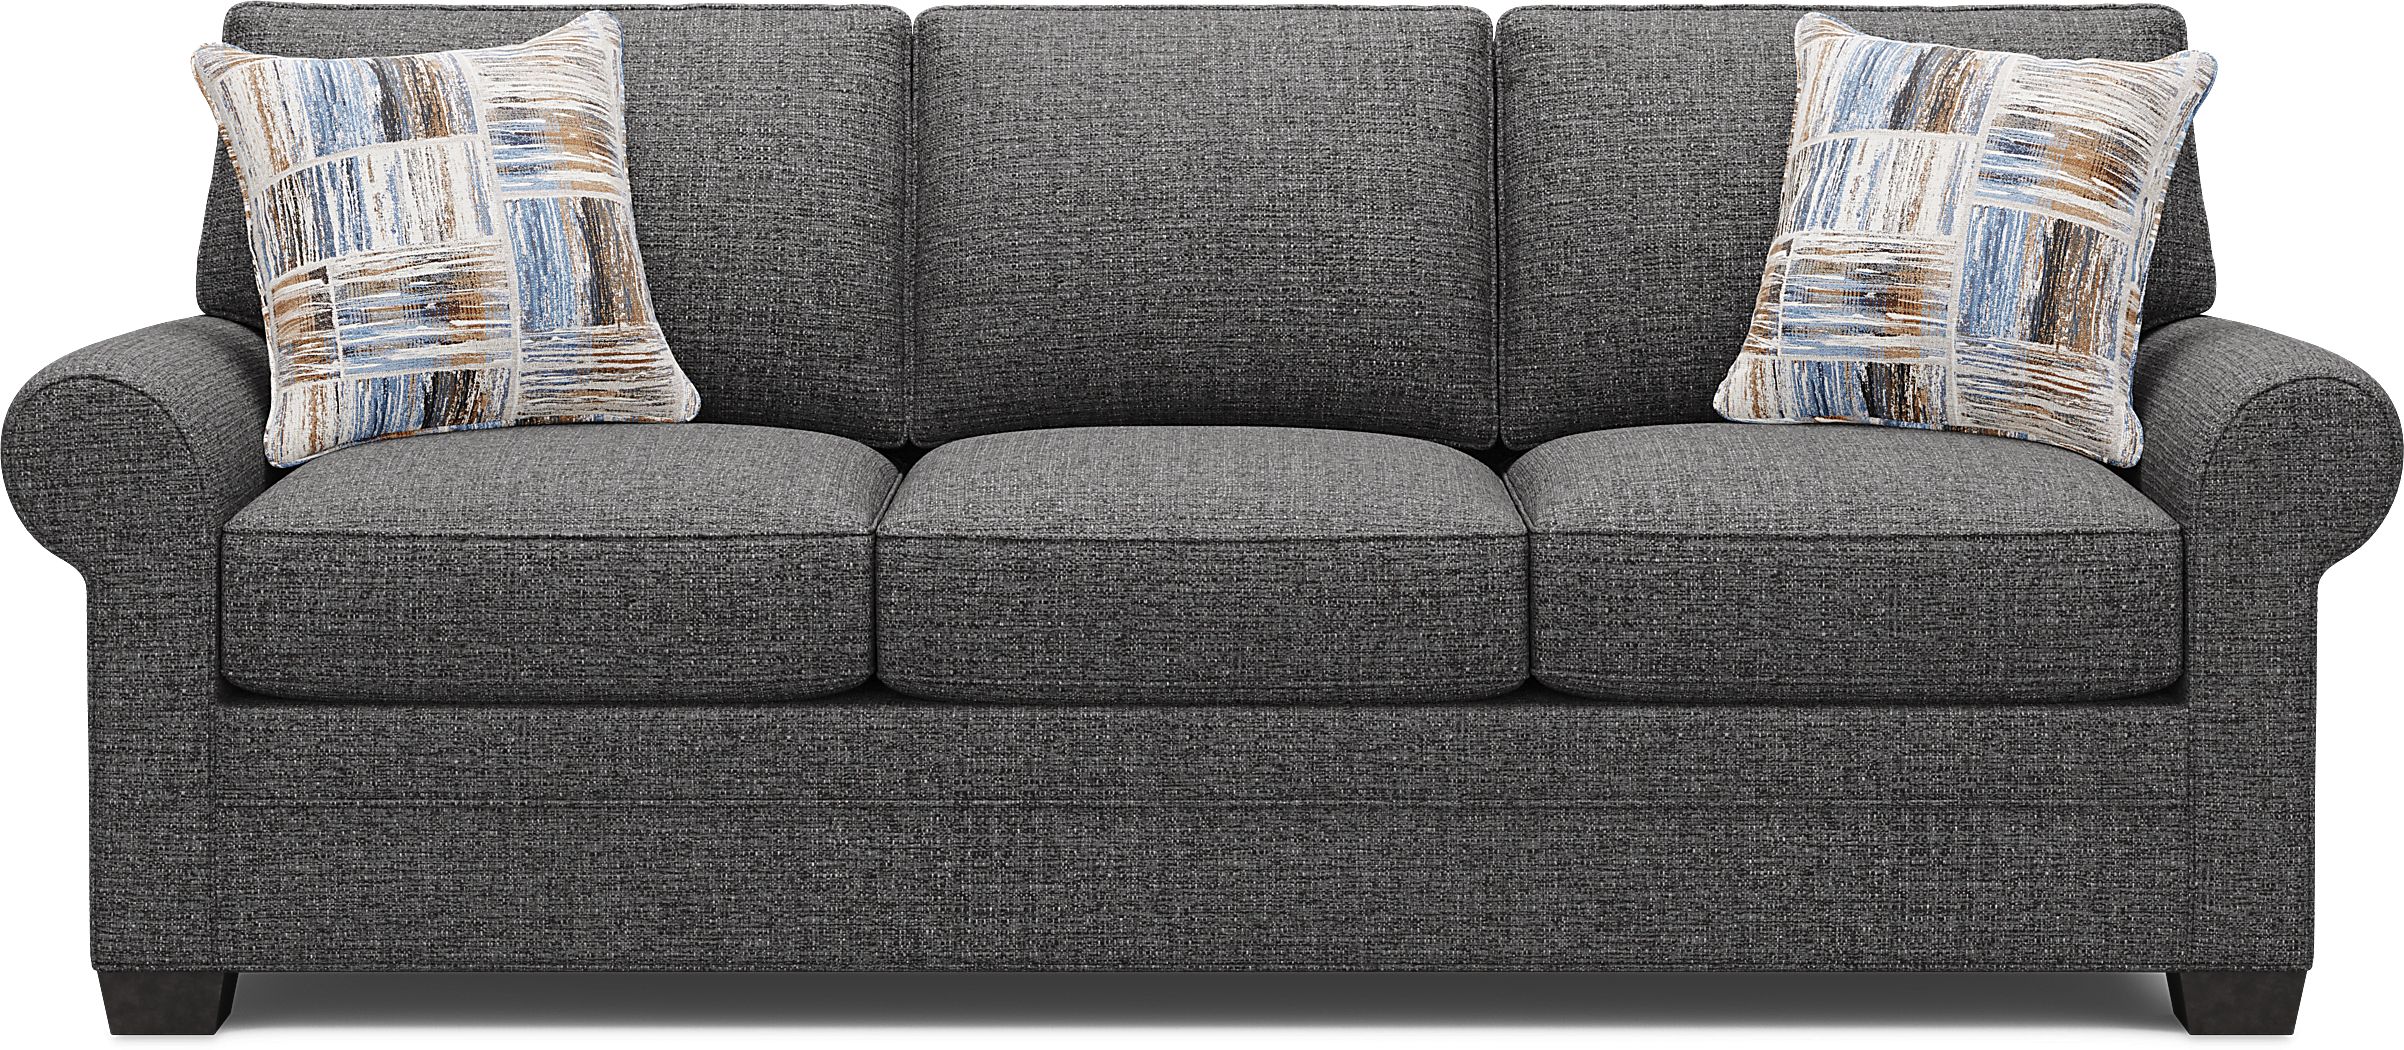 Bellingham Granite Textured Sleeper Sofa